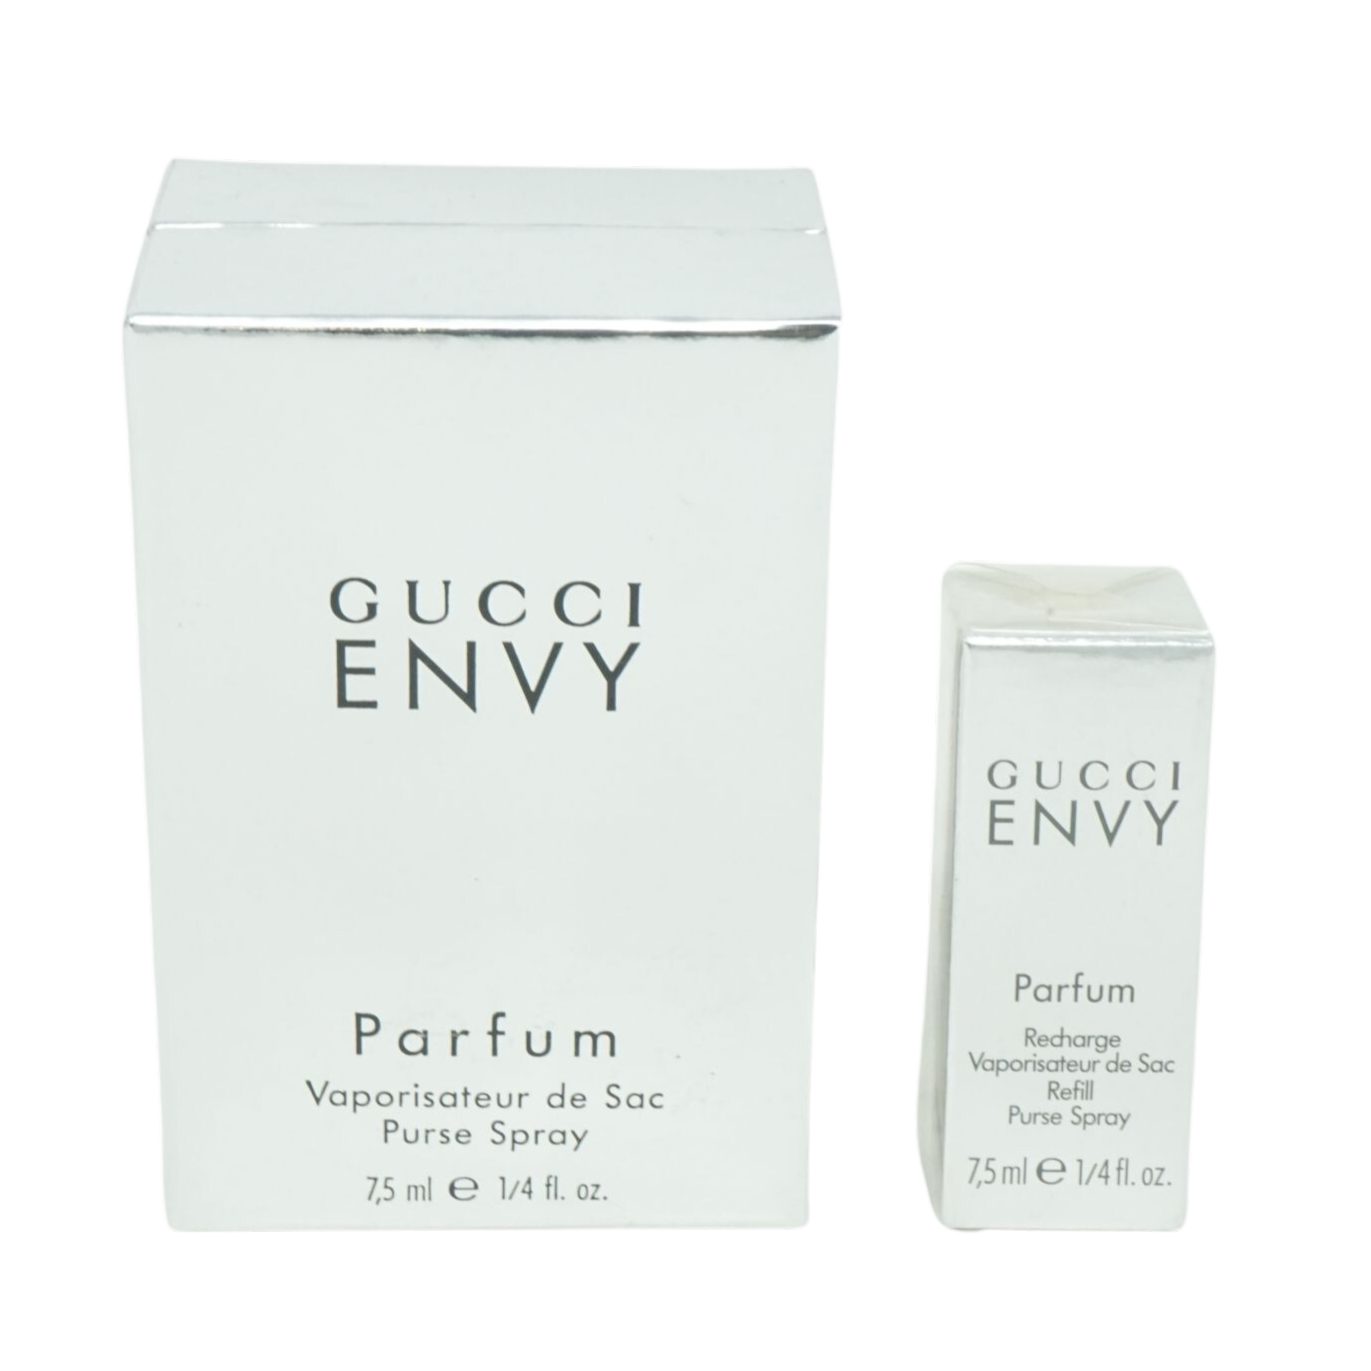 GUCCI Extrait Parfum Gucci ENVY Parfum / Extrait 7,5ml Purse Spray Bijou